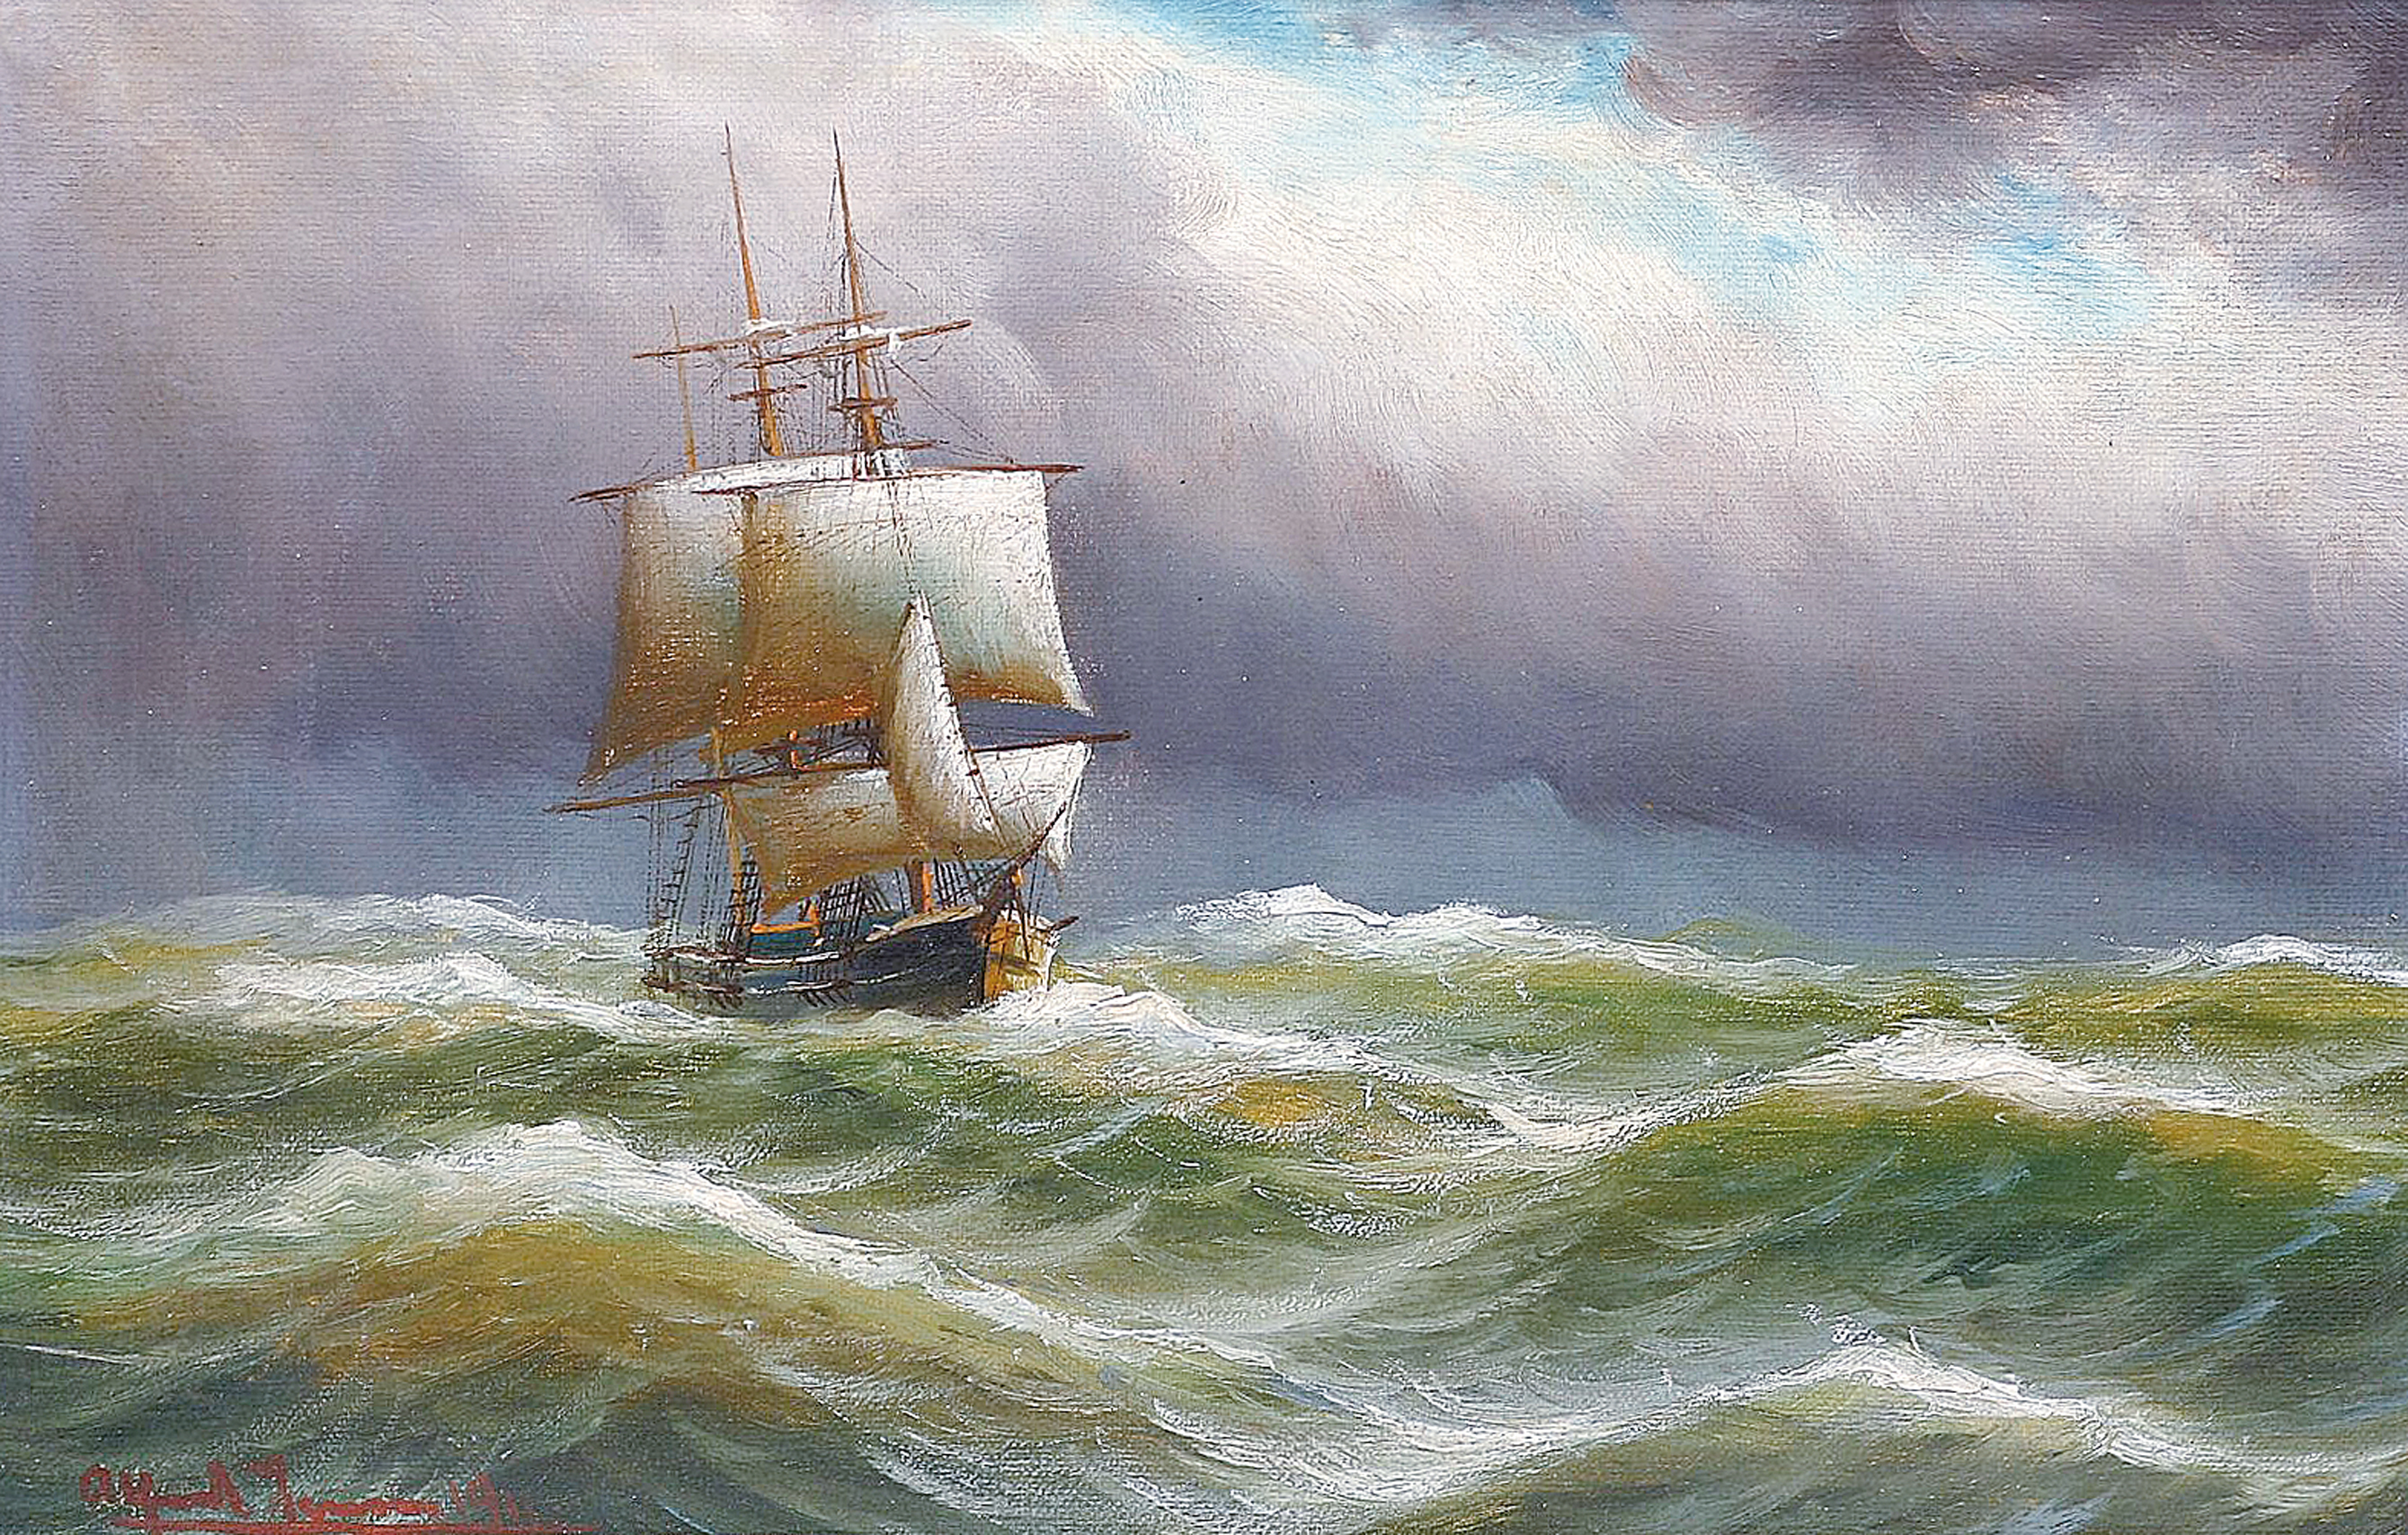 A sailship in sunshine but beginning storm